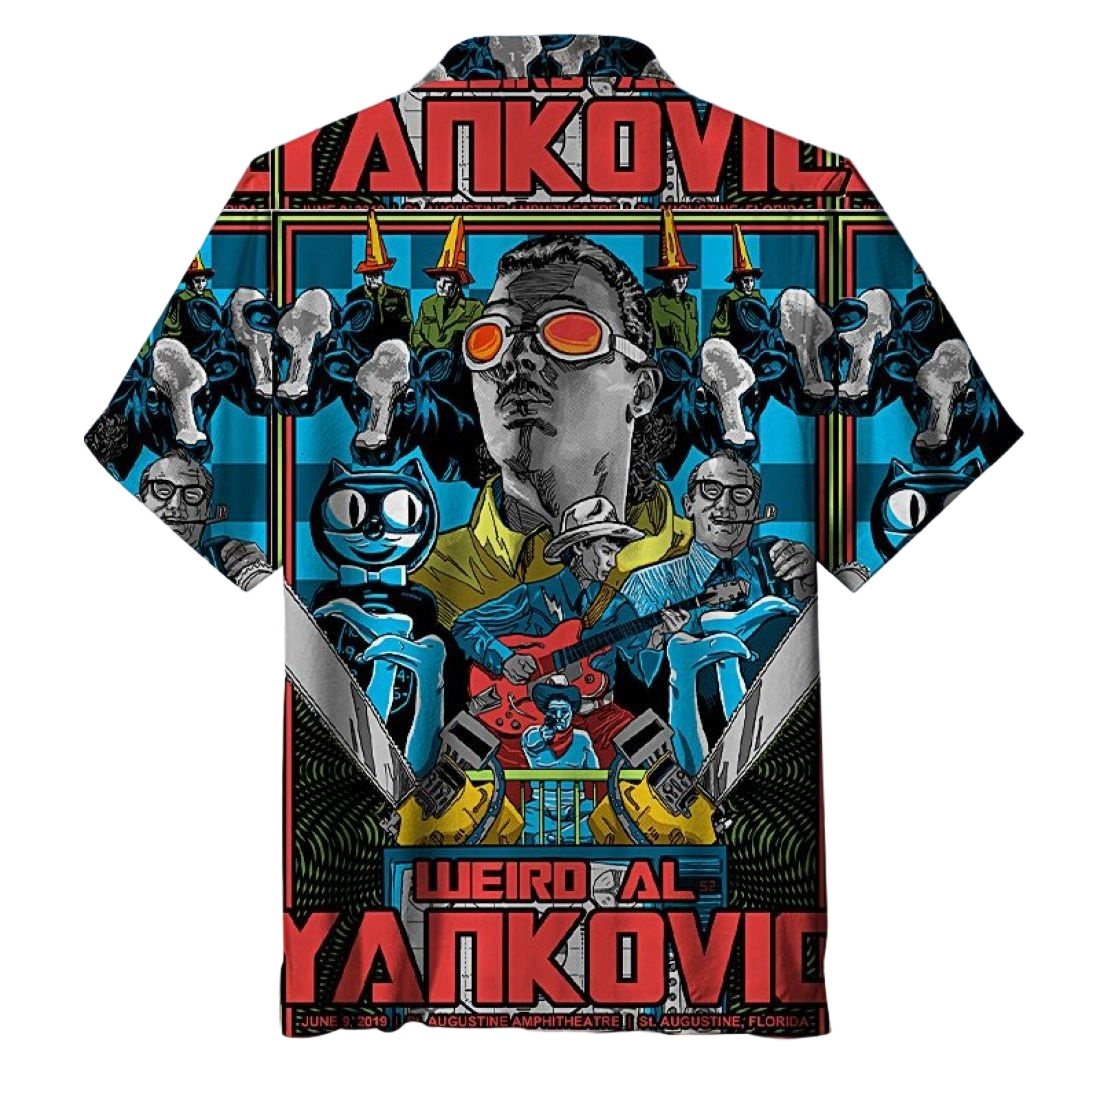 Hawaiian Shirt Worn by “Weird Al” Yankovic | SMHW-0002